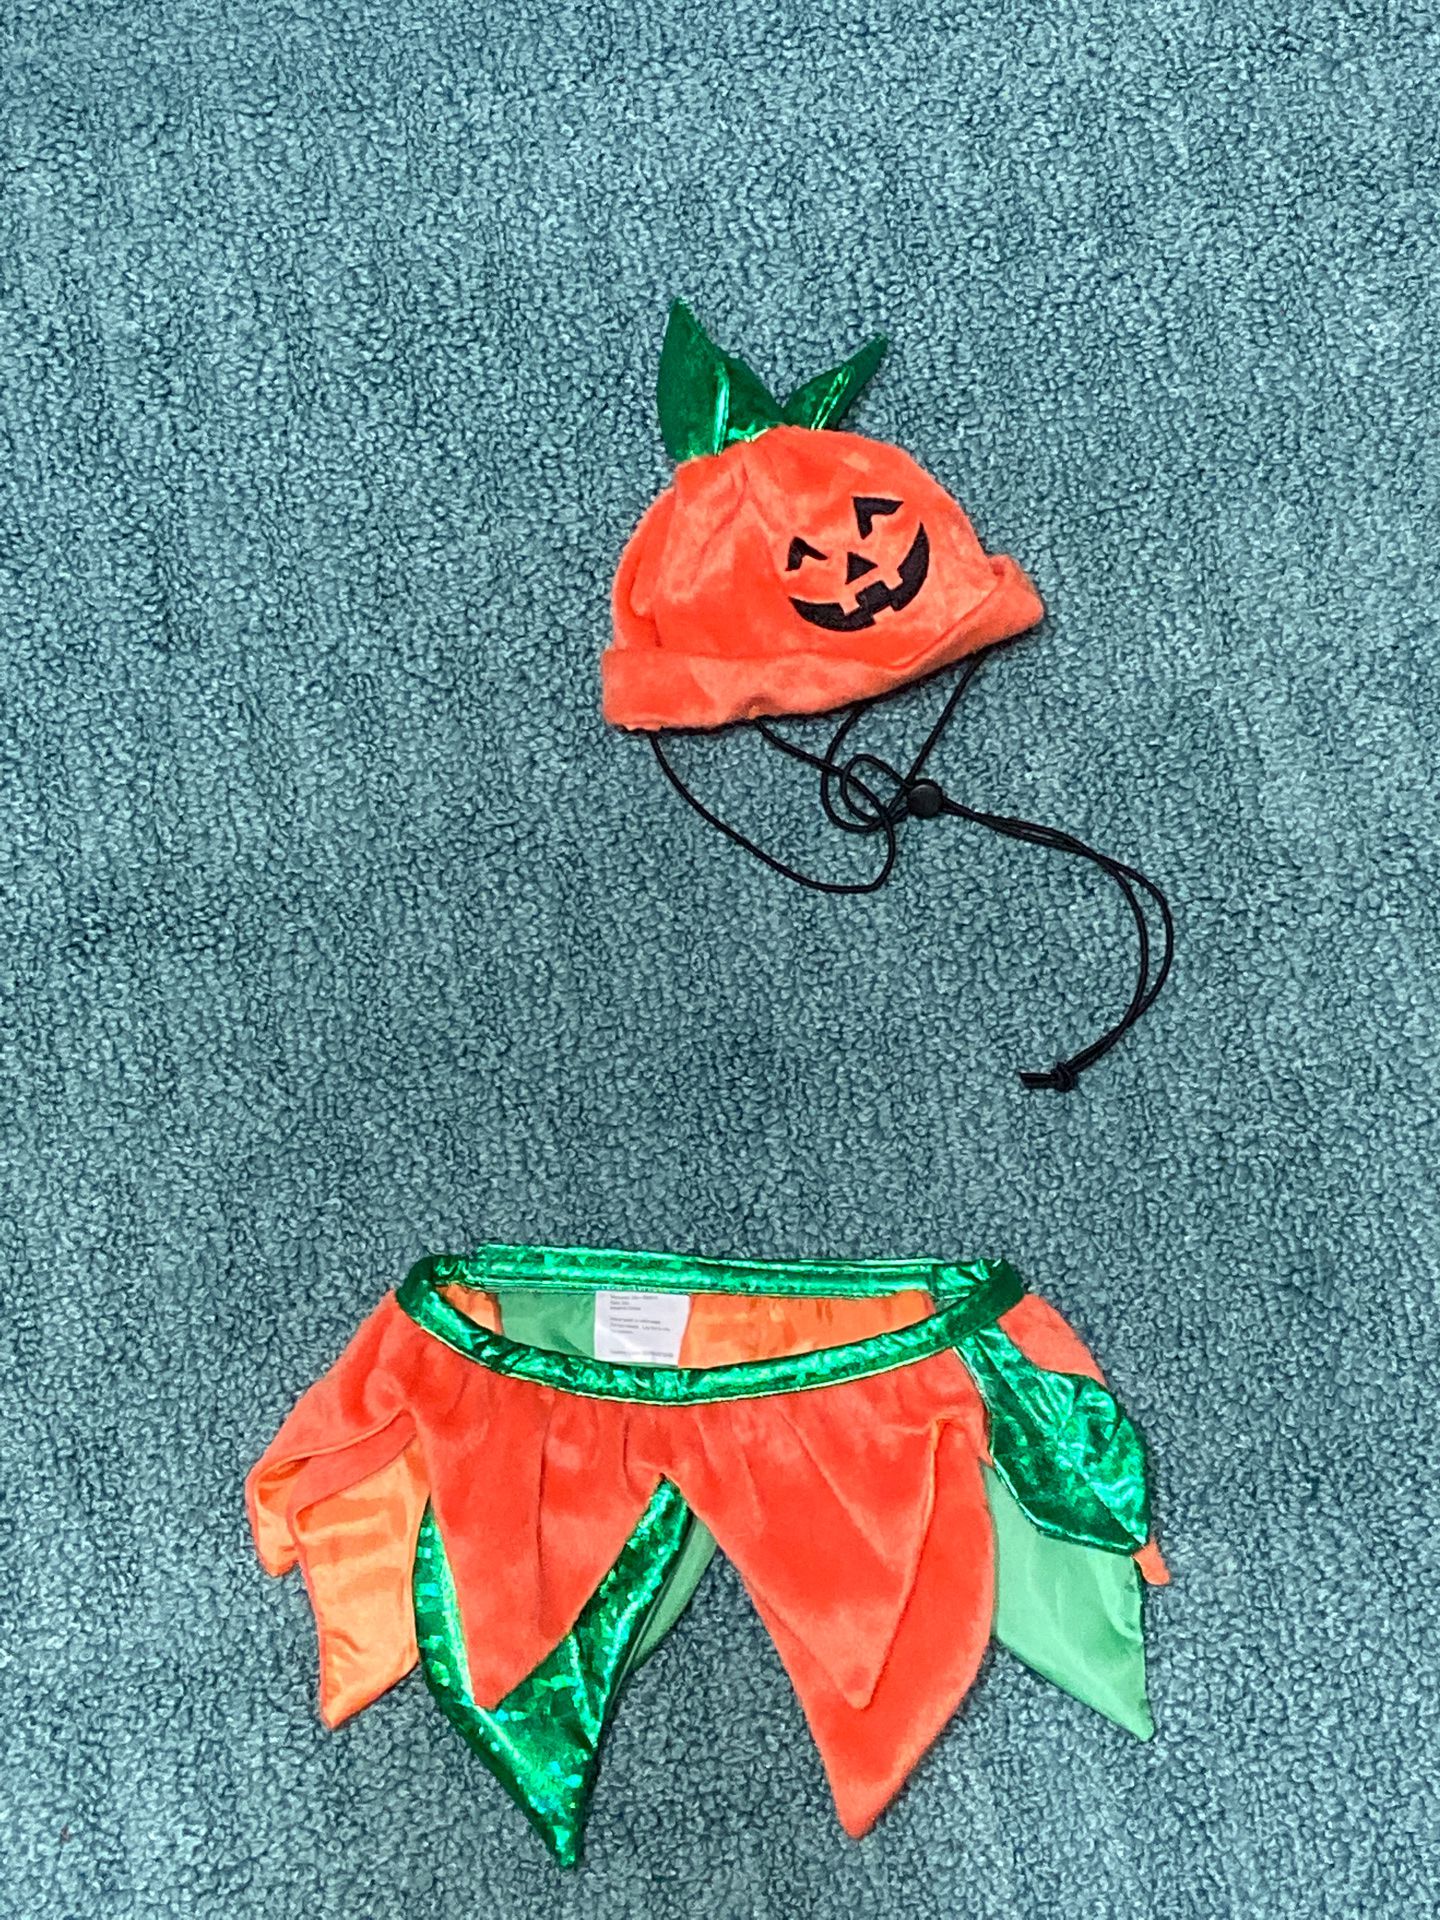 Pumpkin Pet costume